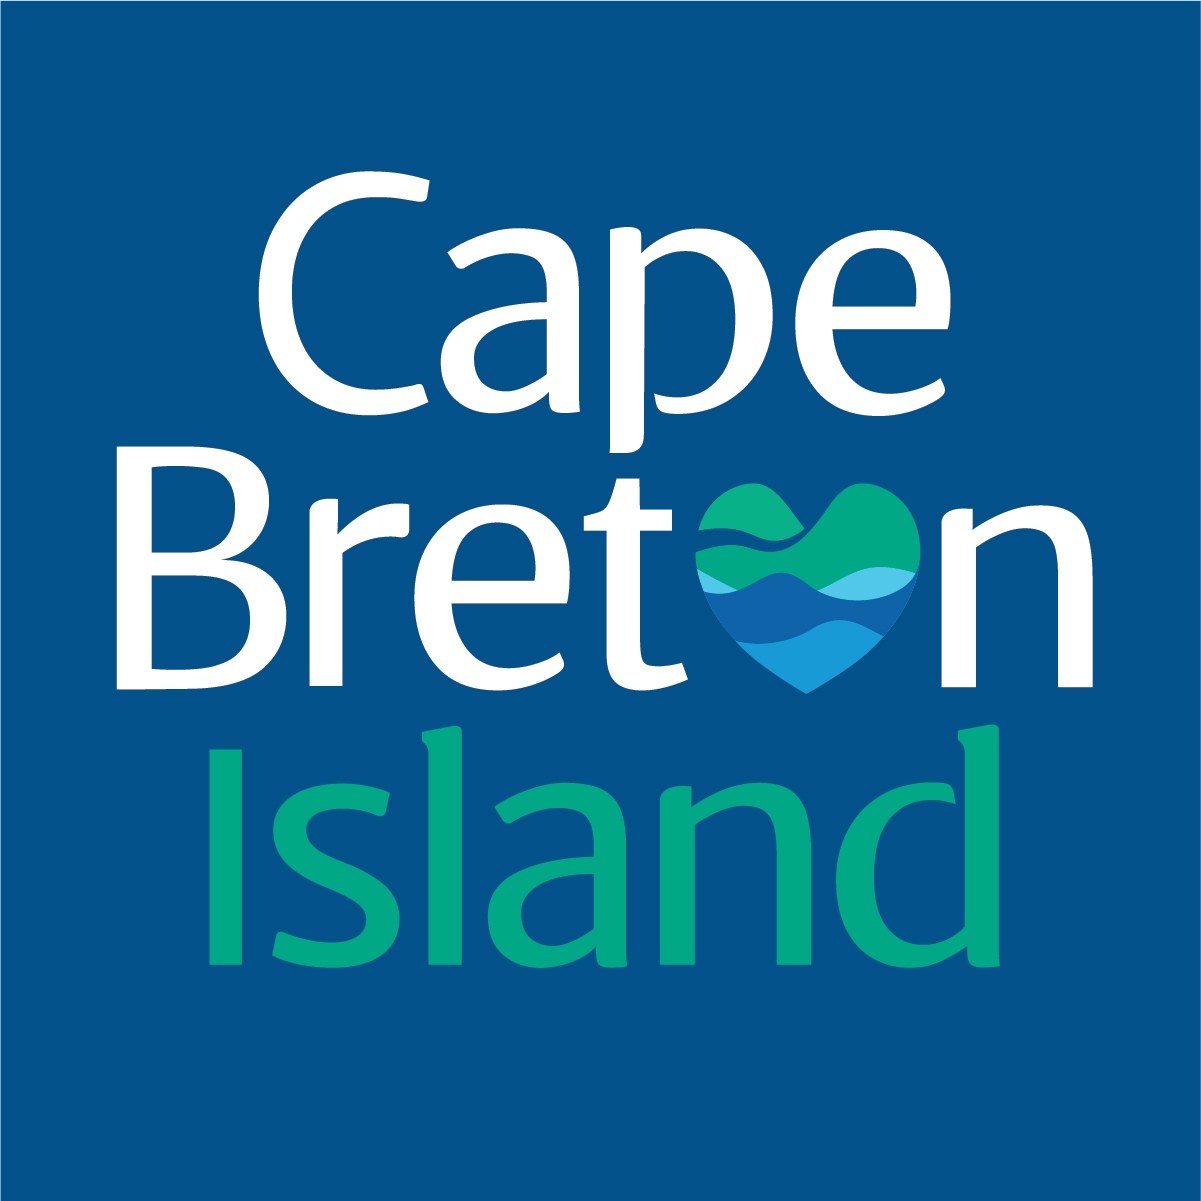 Destination Cape Breton Logo